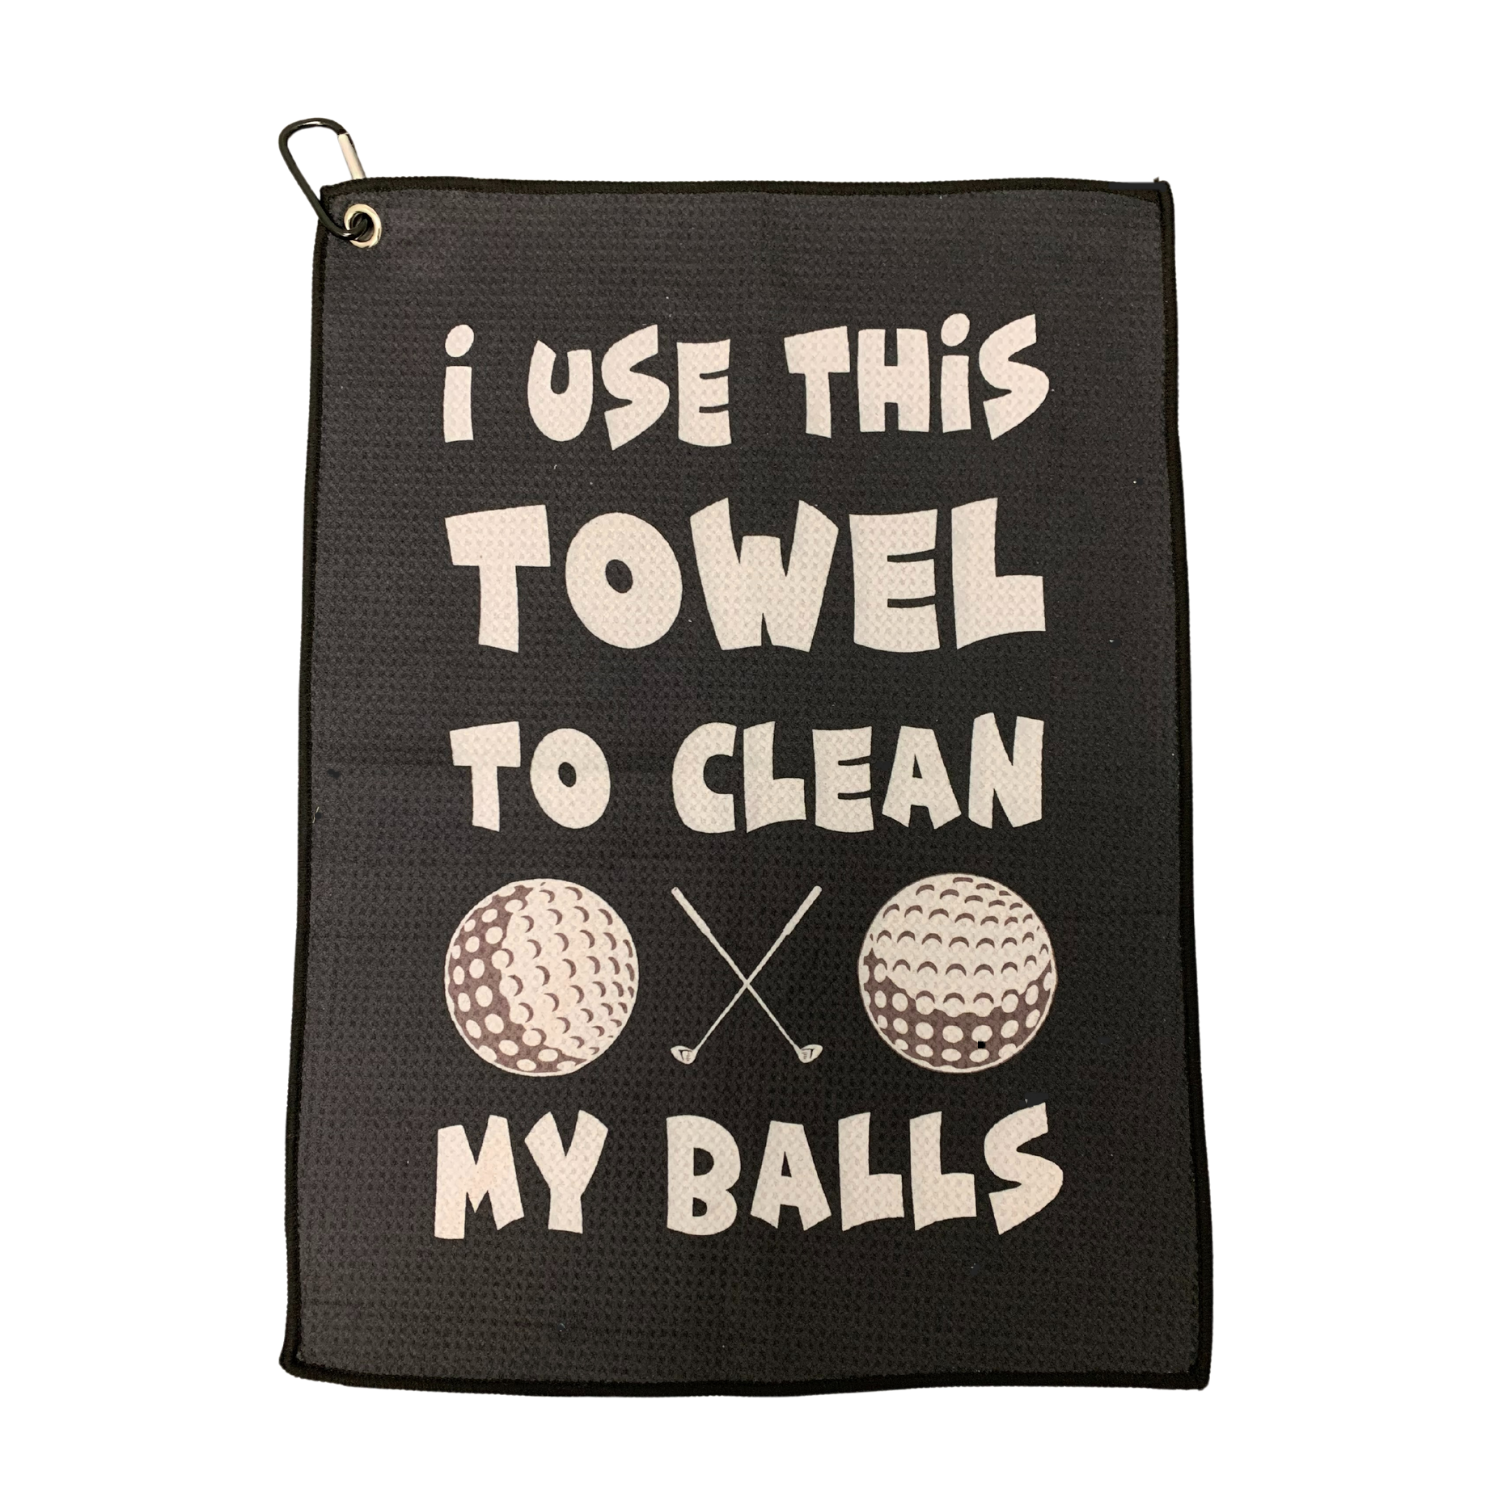 Clean My Balls Golf Towel Funny Gag Gift